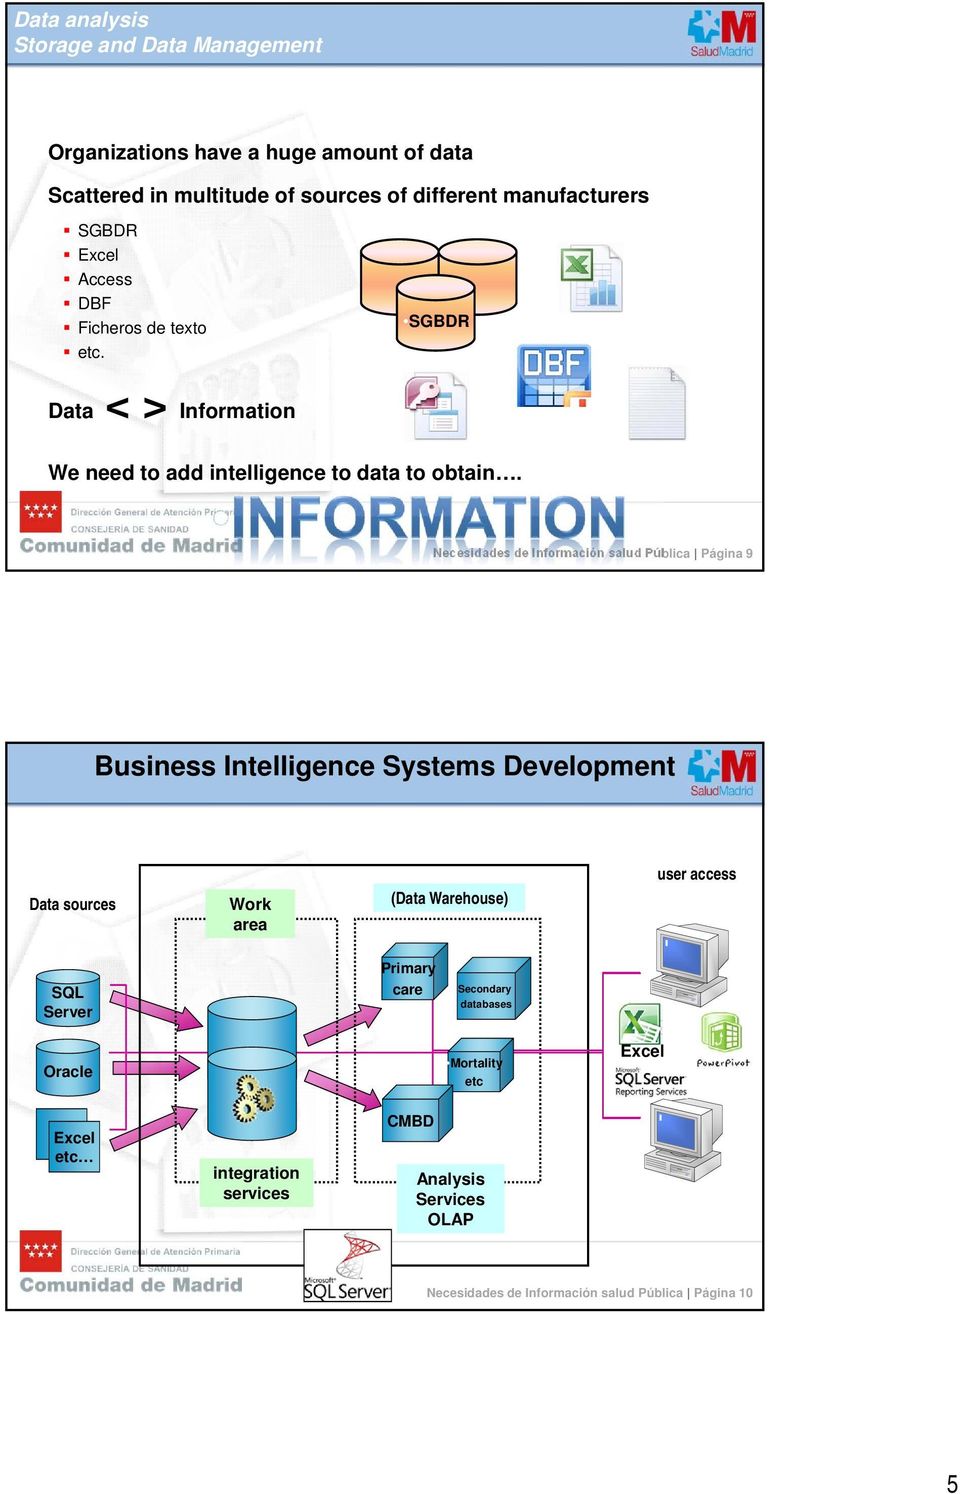 Necesidades de Información salud Pública Página 9 Business Intelligence Systems Development Data sources Work area (Data Warehouse) user access SQL